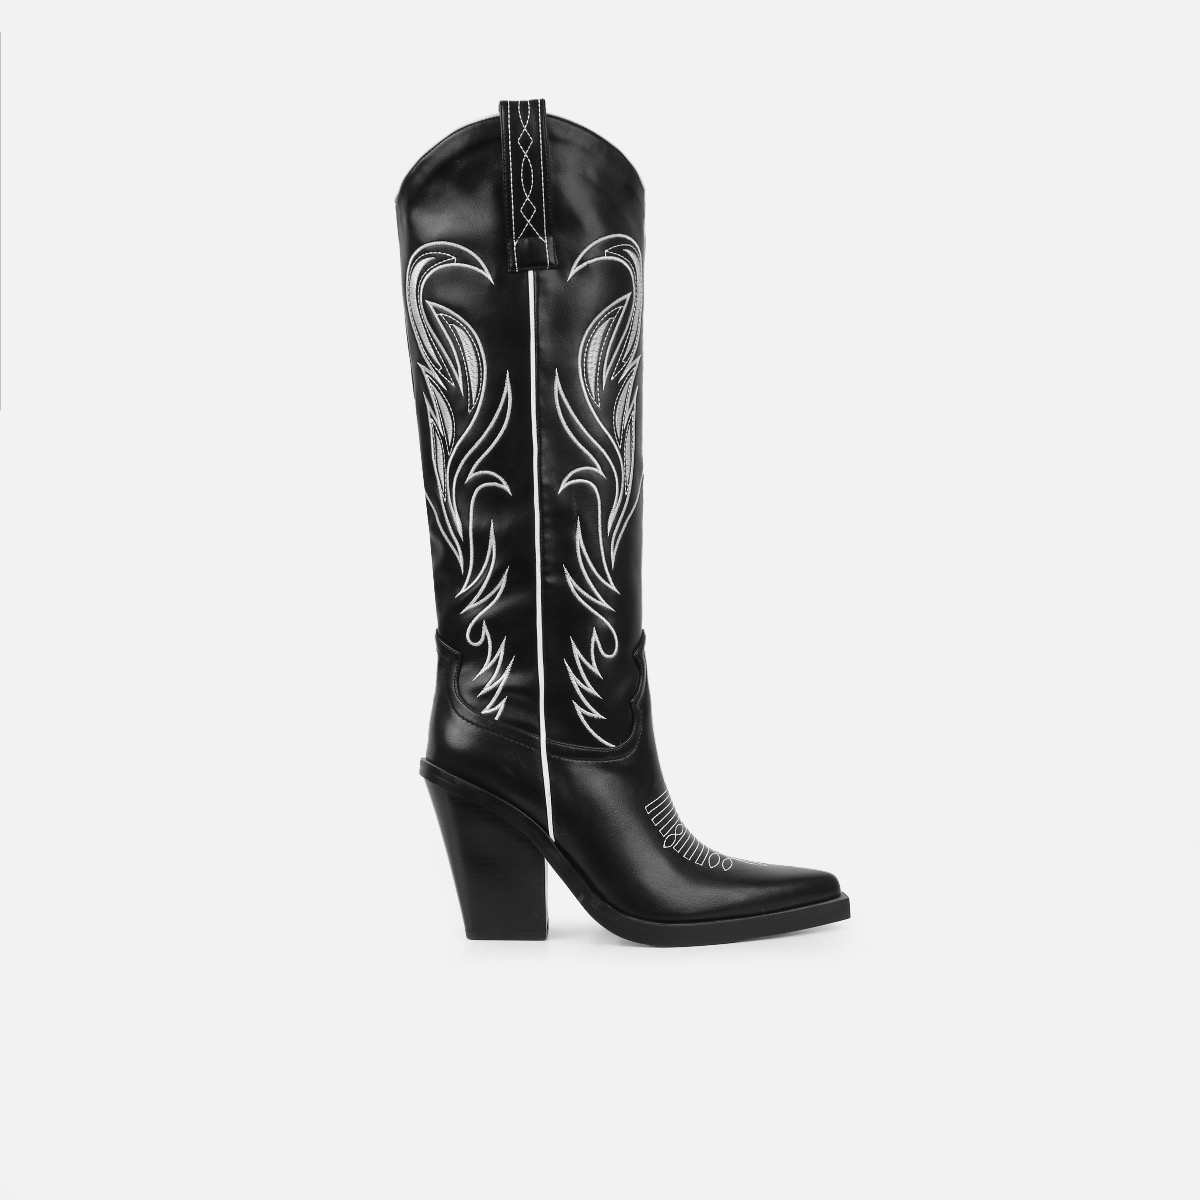 Eagon black knee high western boots